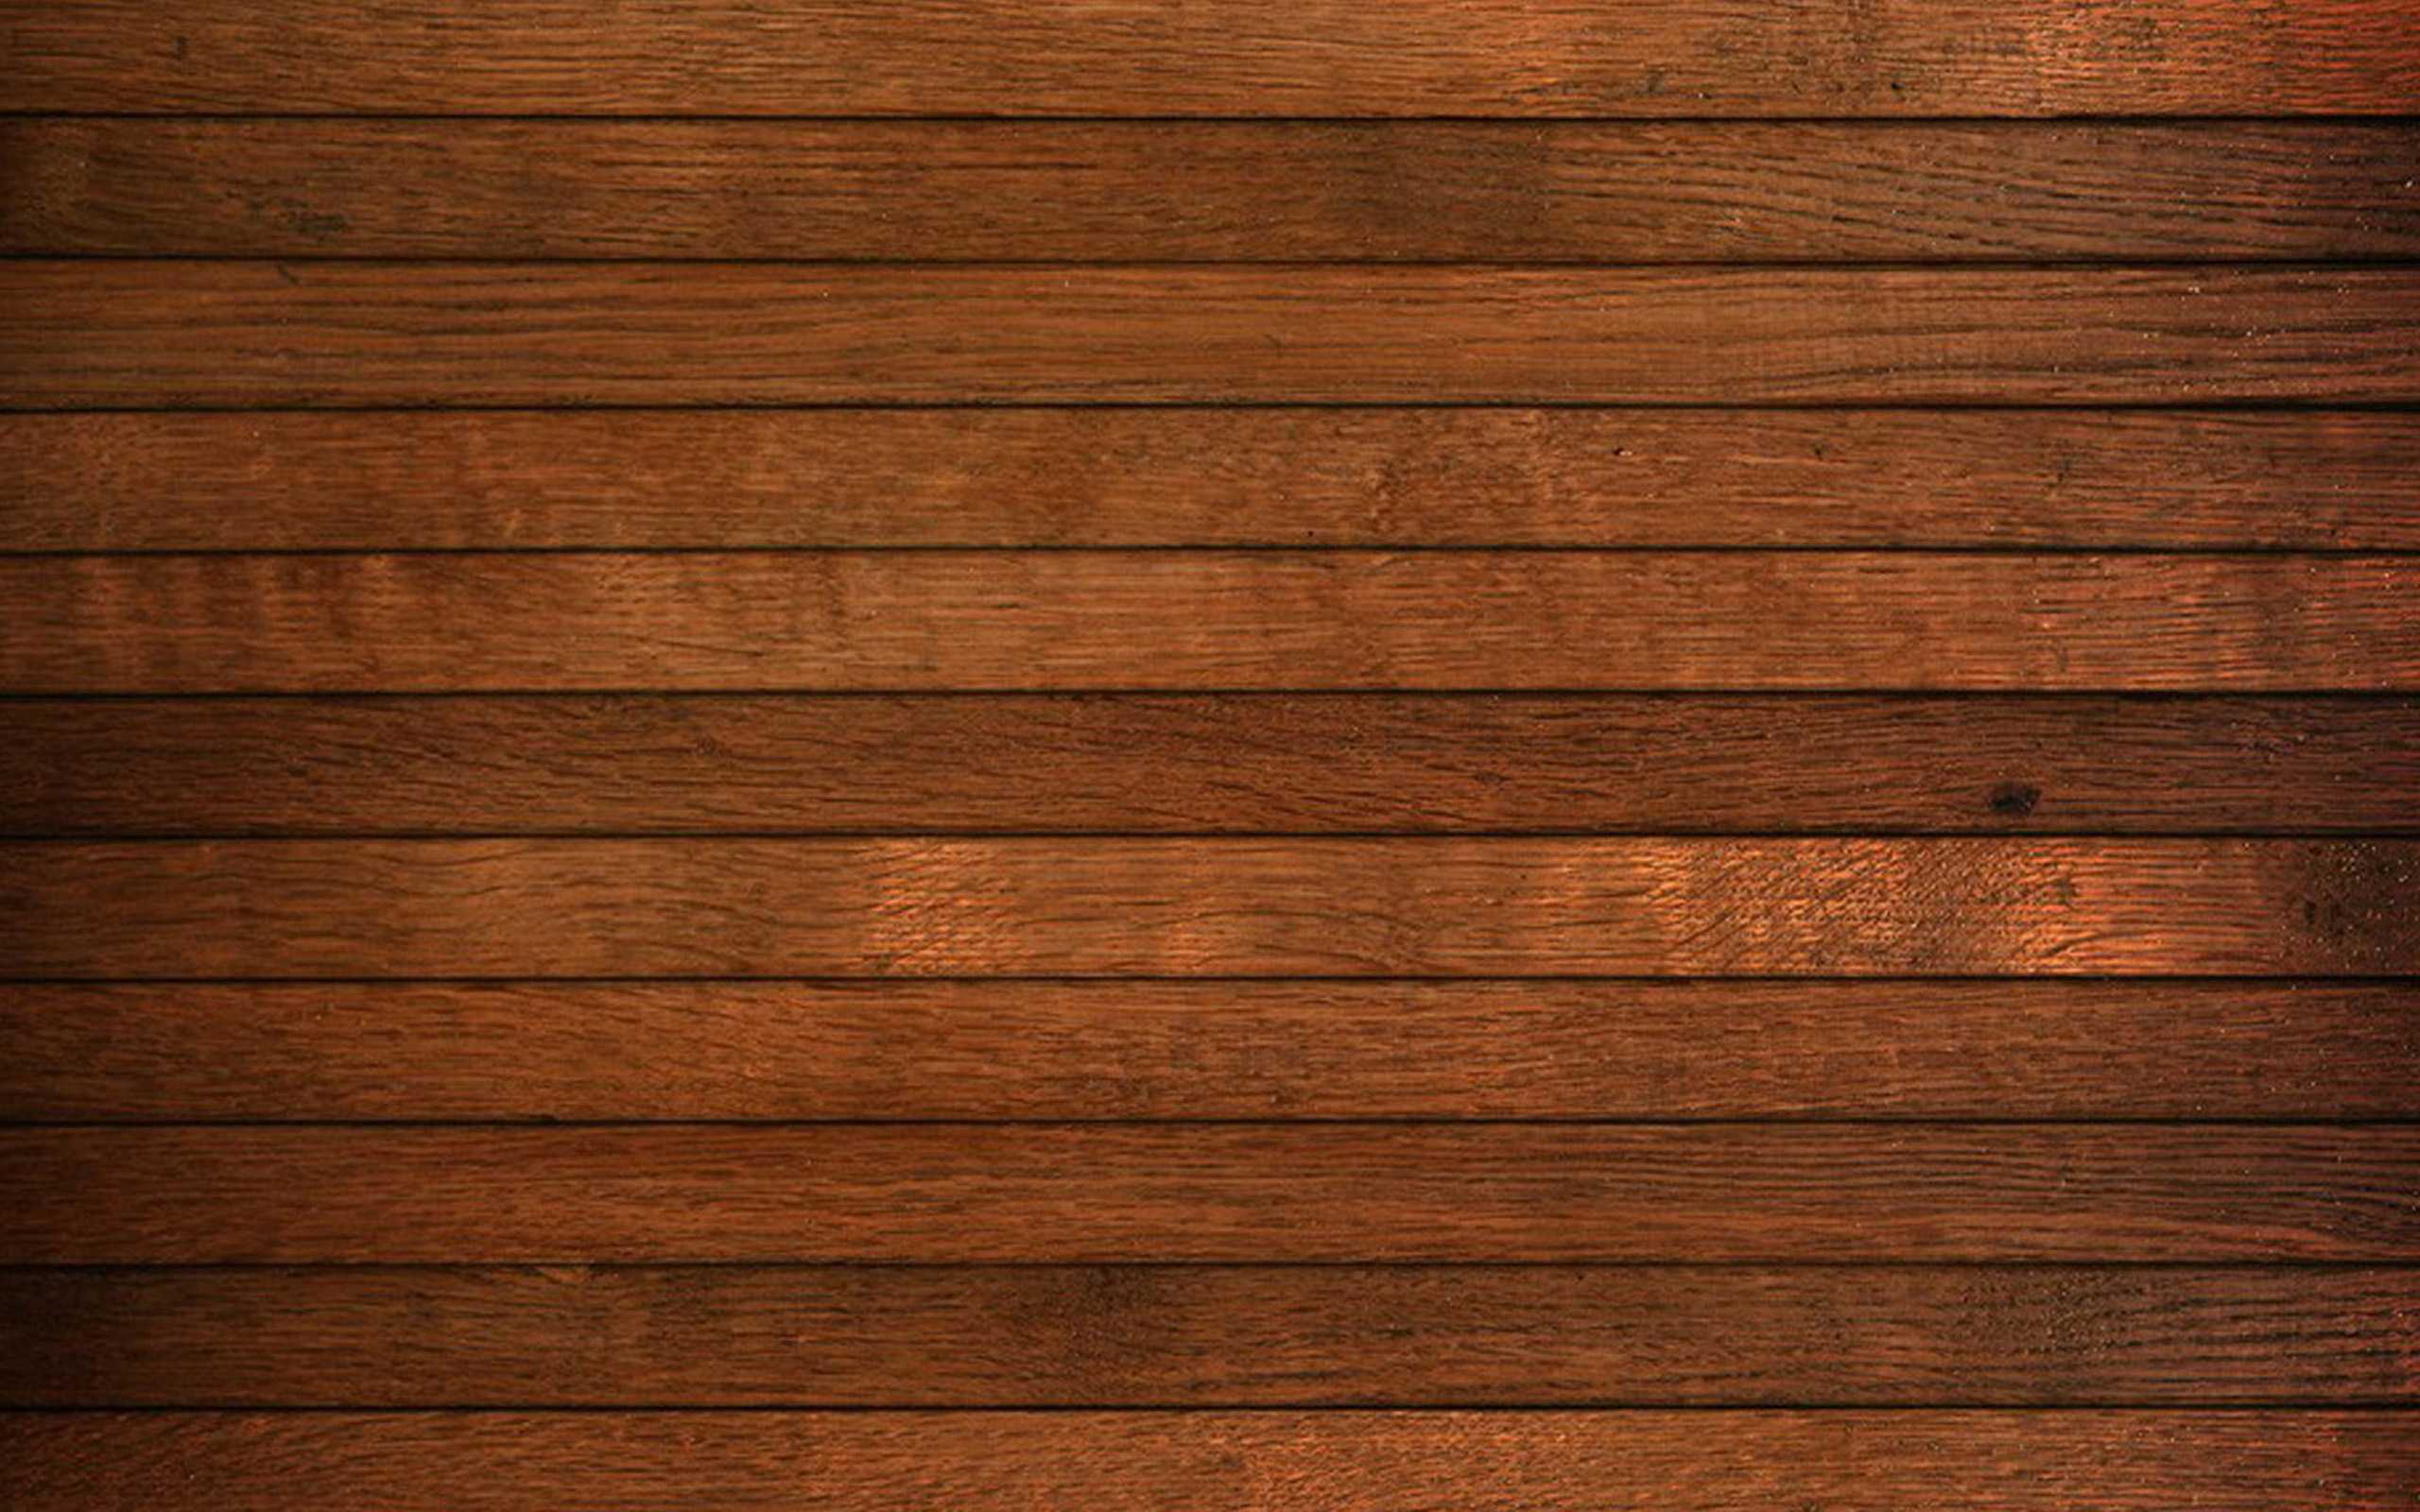 Wood Grain HD Backgrounds.